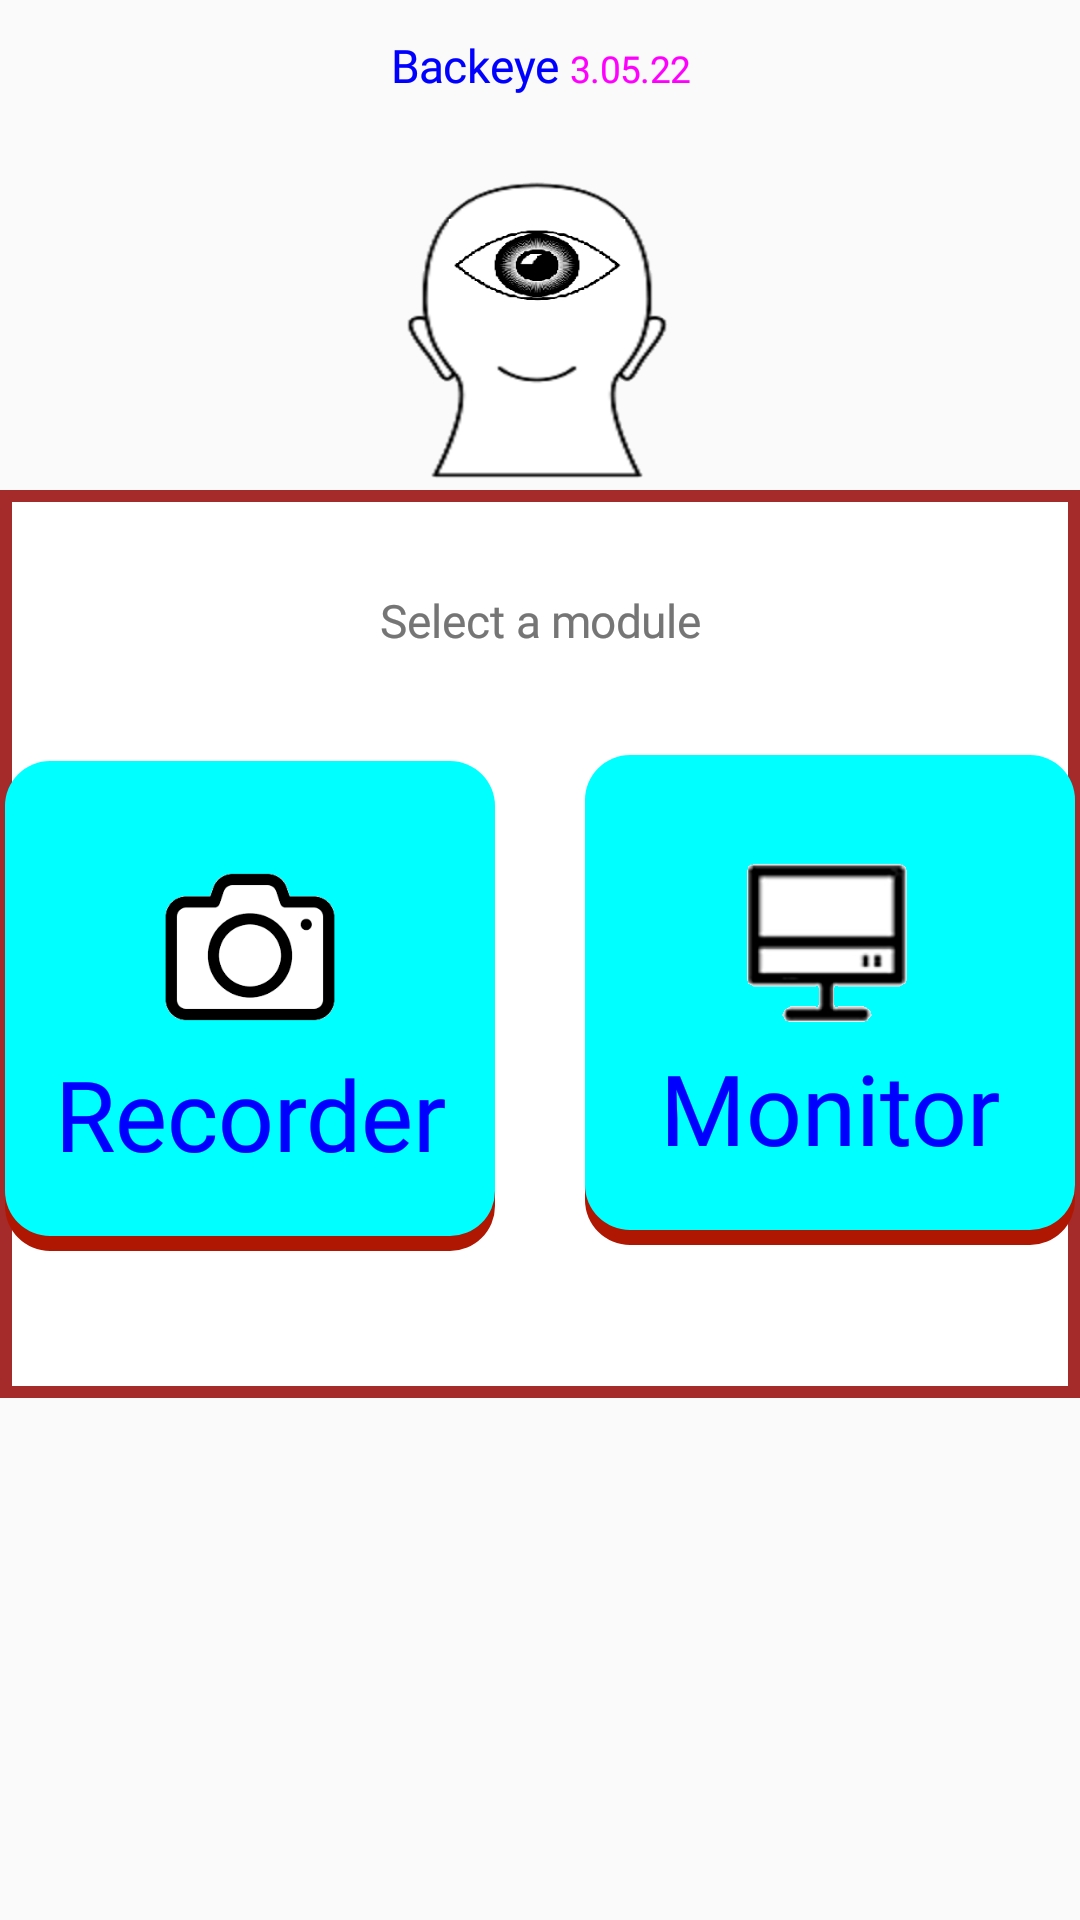 module selector